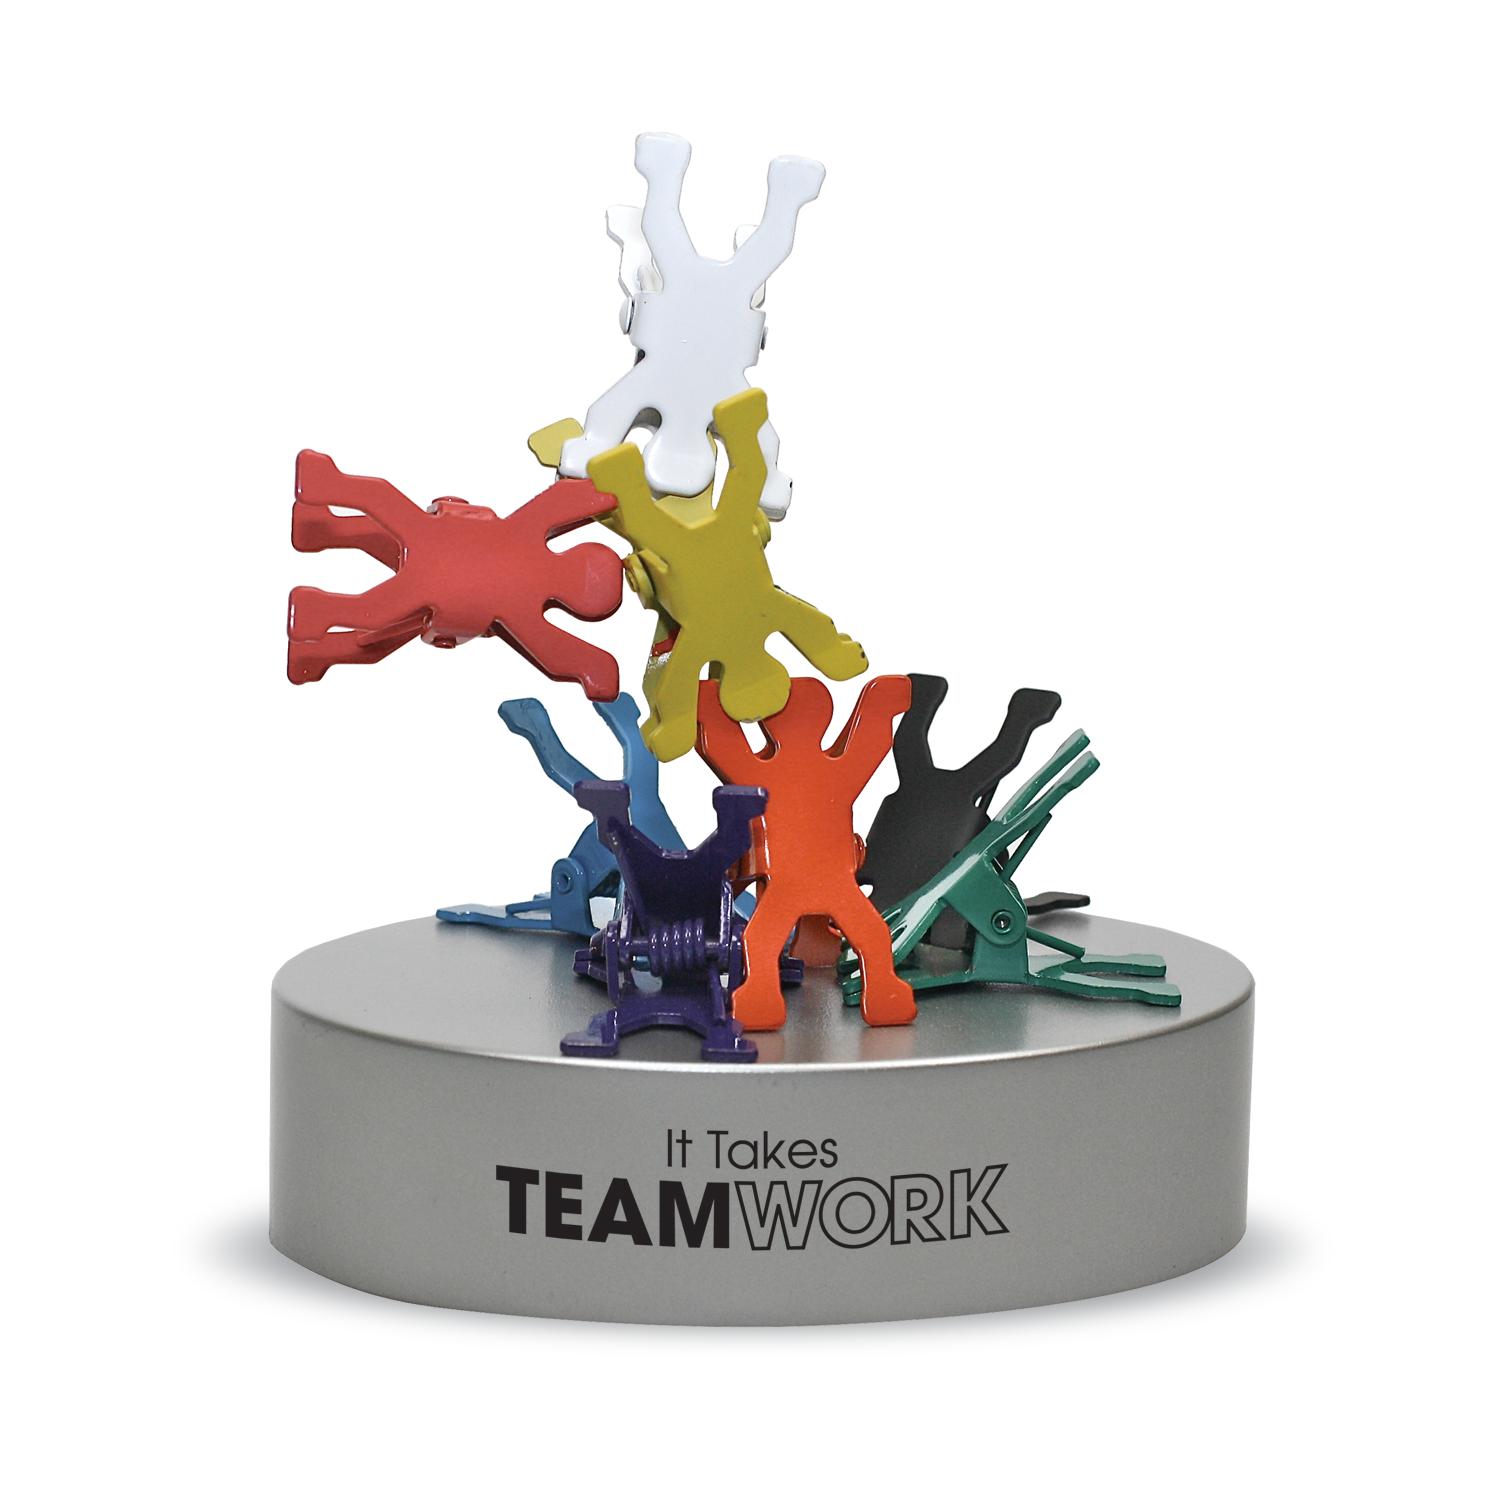 Teamwork Clip Holder   Teamwork Gift   Desktop Game   Fun Motivation